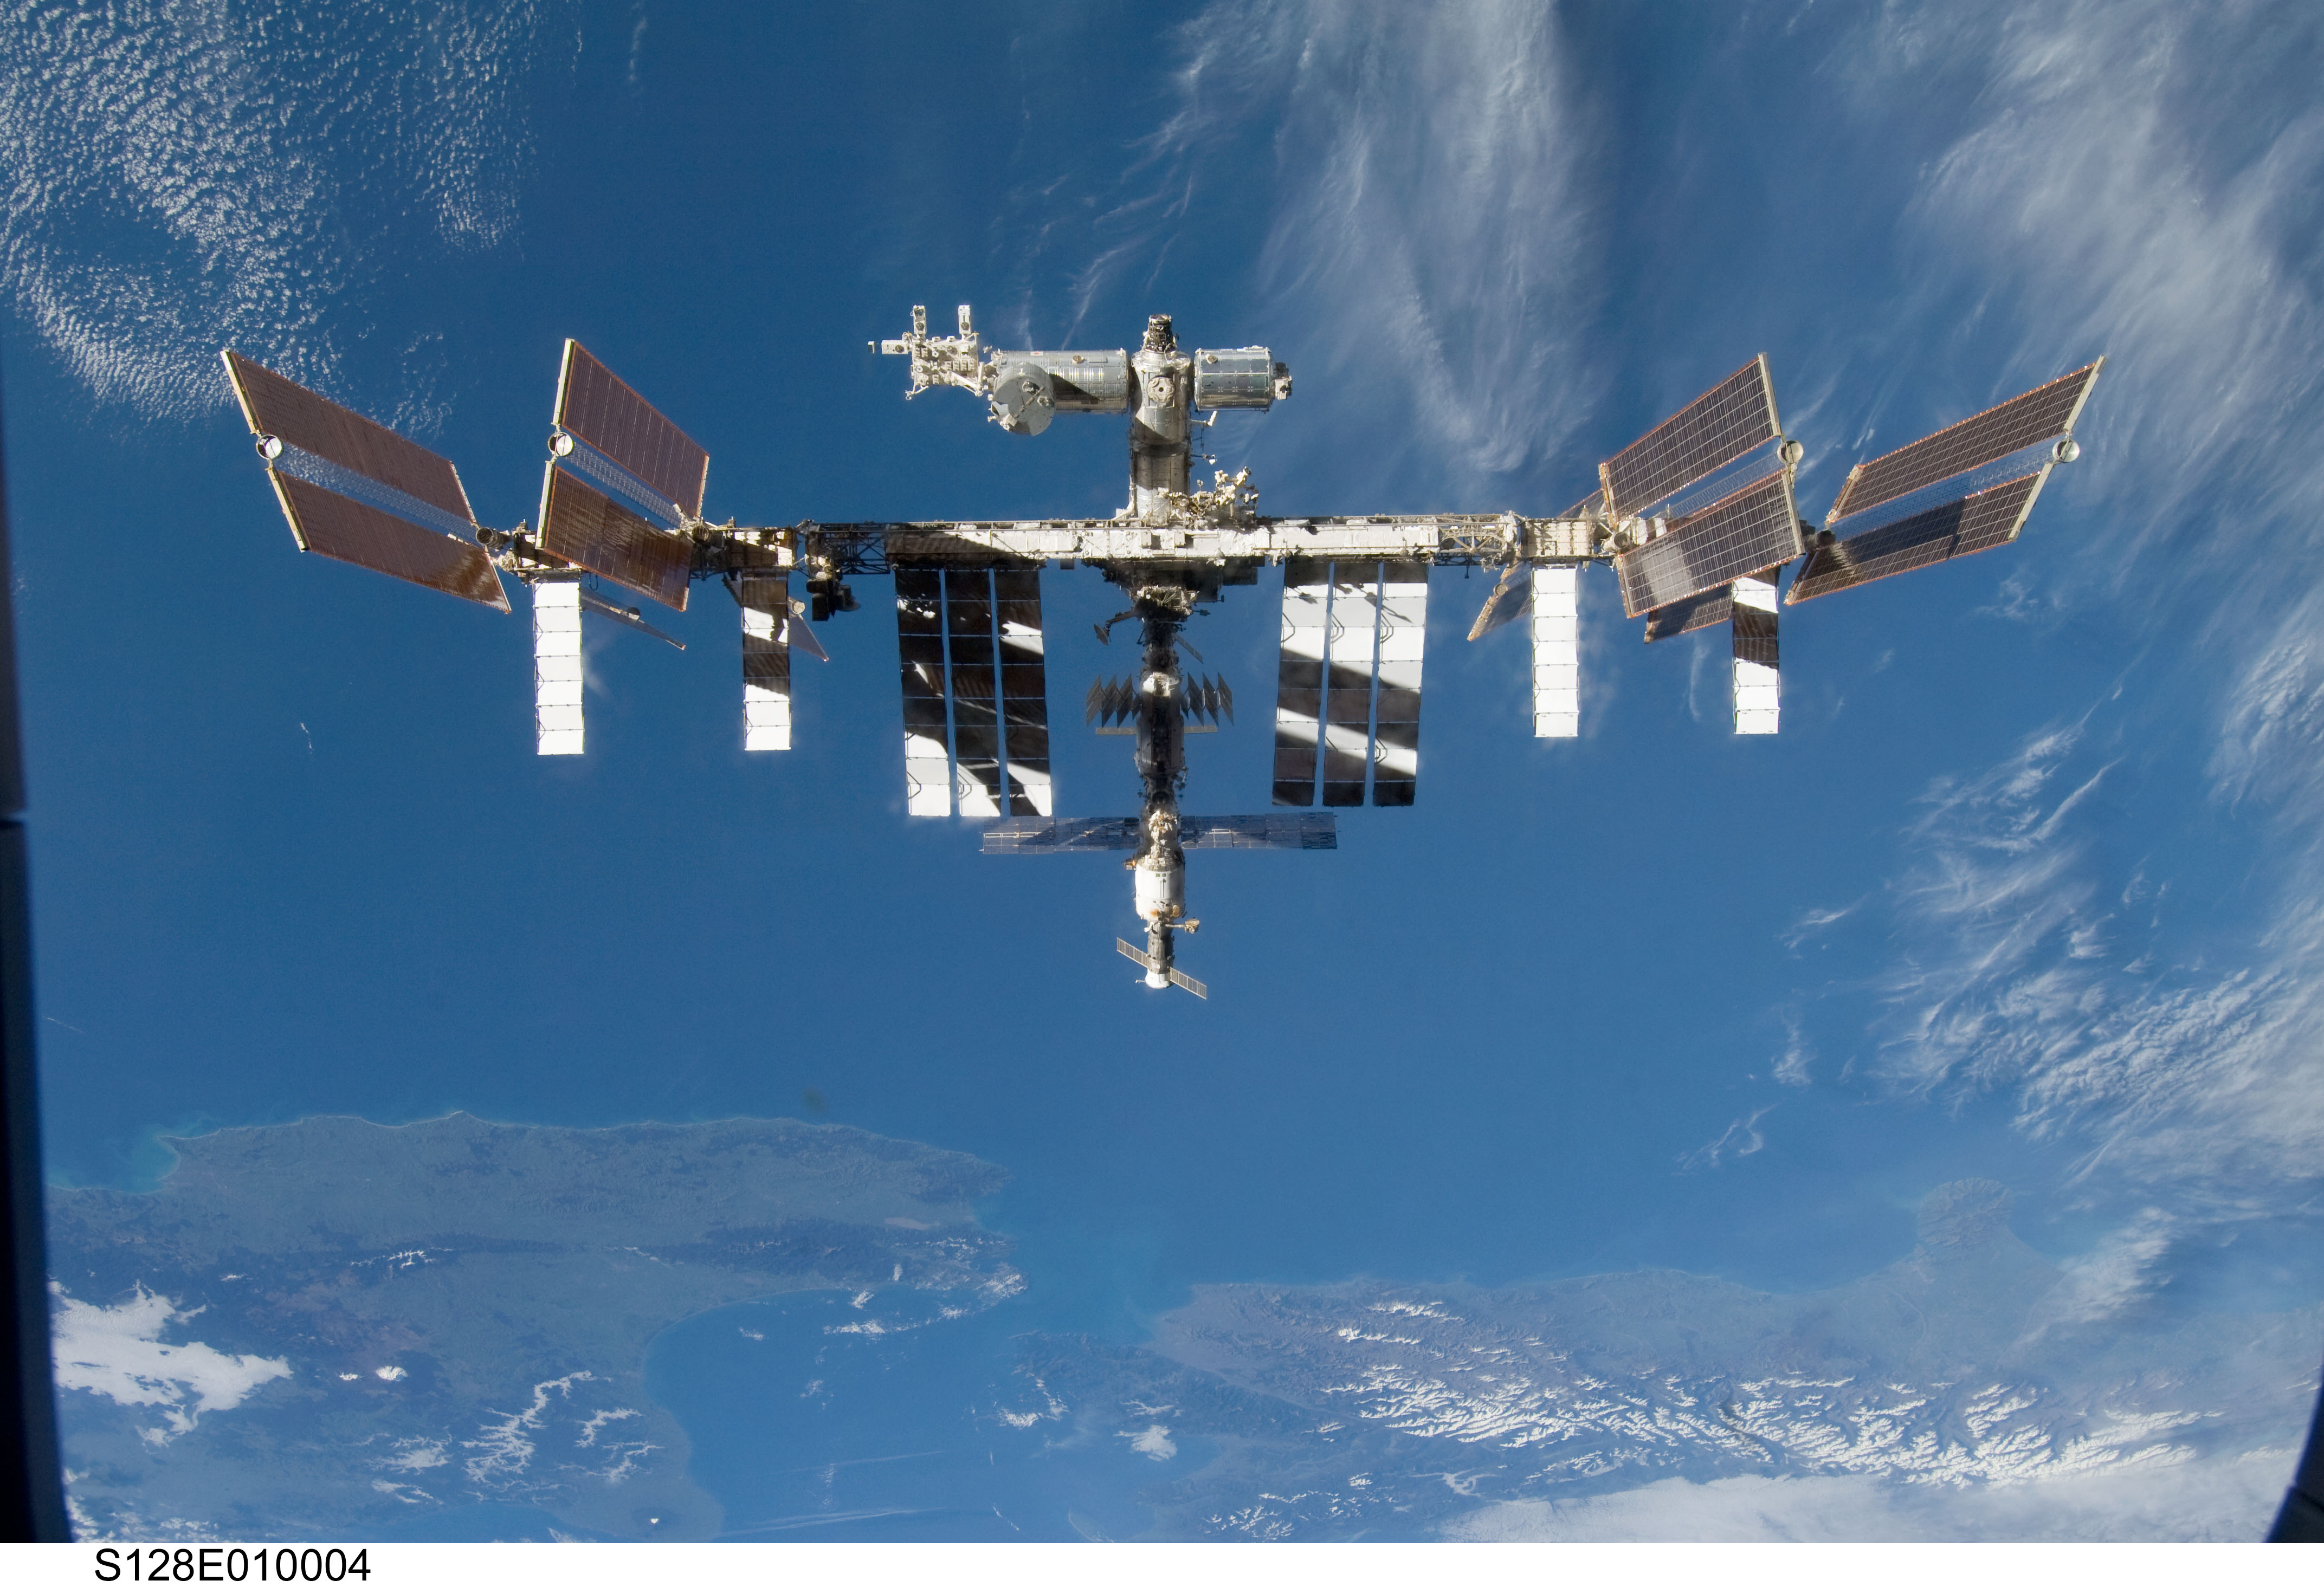 outer space, International Space Station - desktop wallpaper